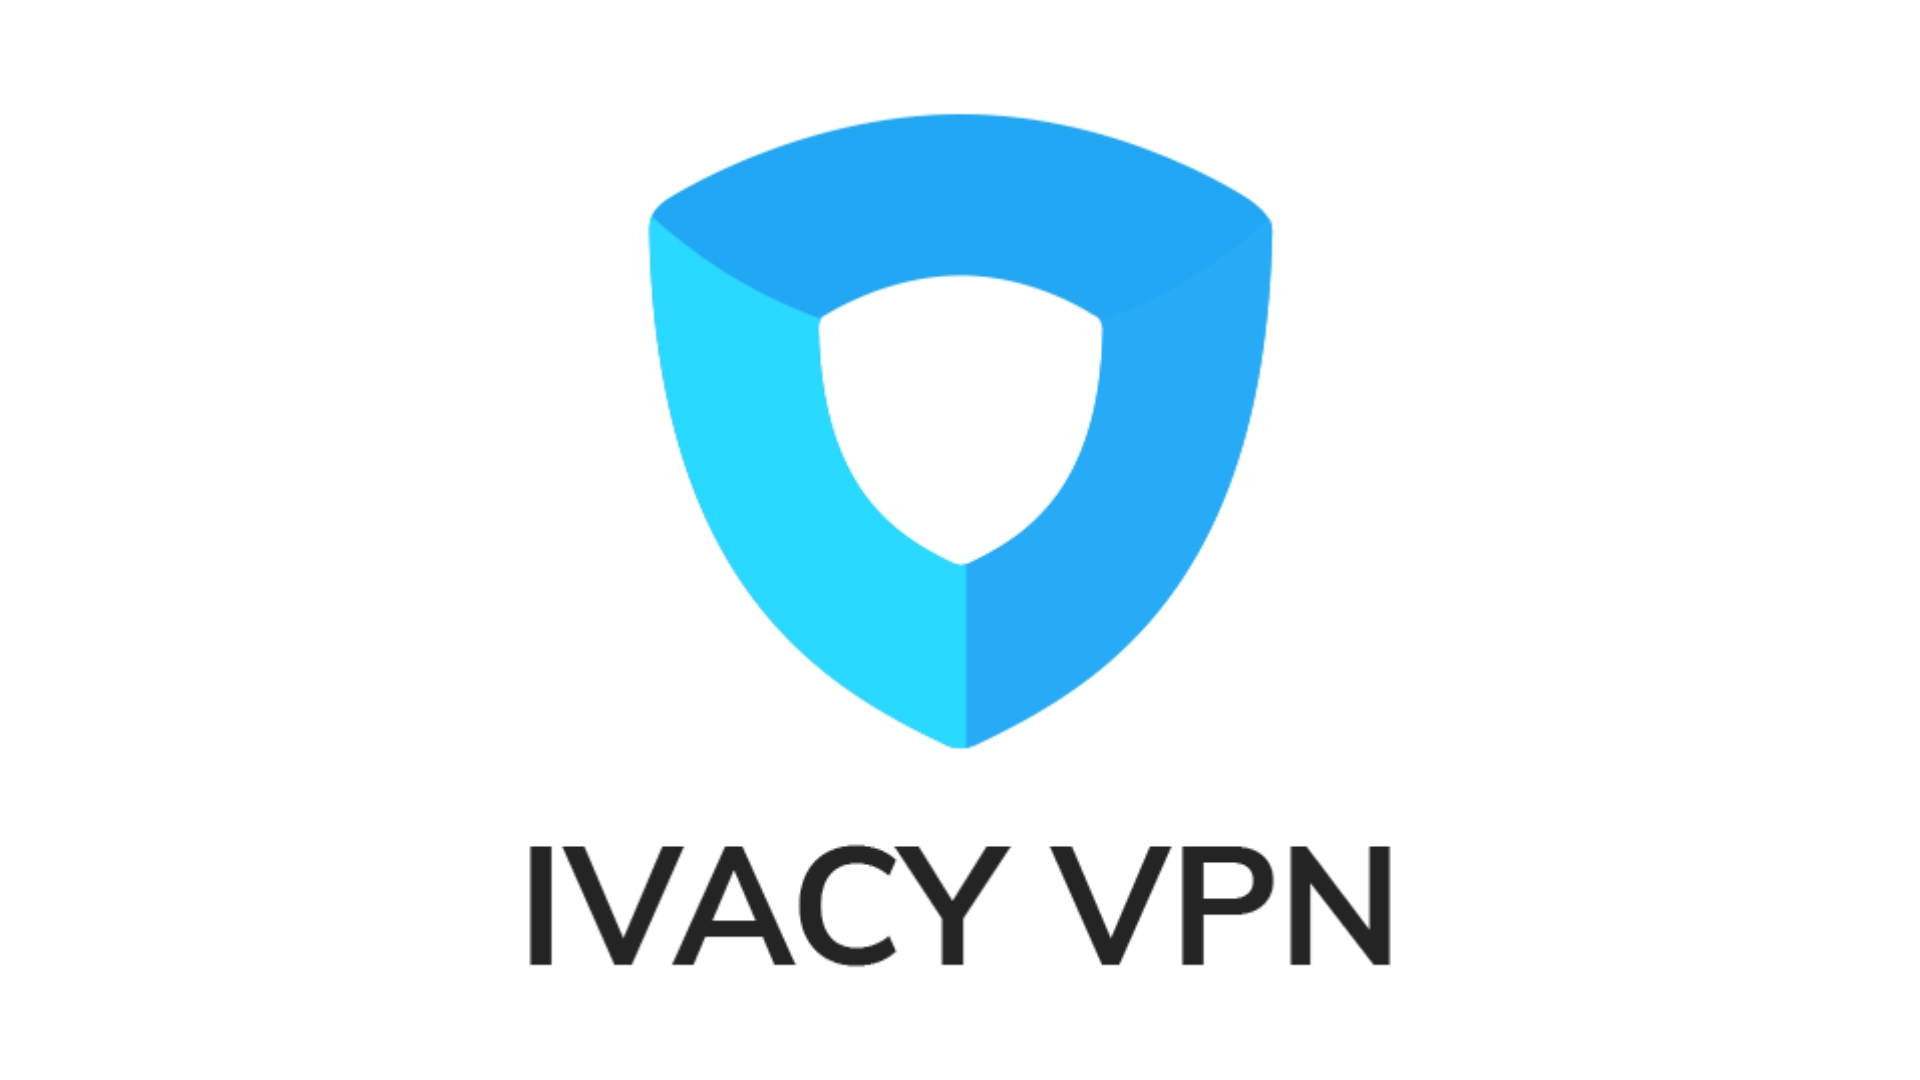 Best no-logs VPN: Ivacy VPN. Image shows the company logo.